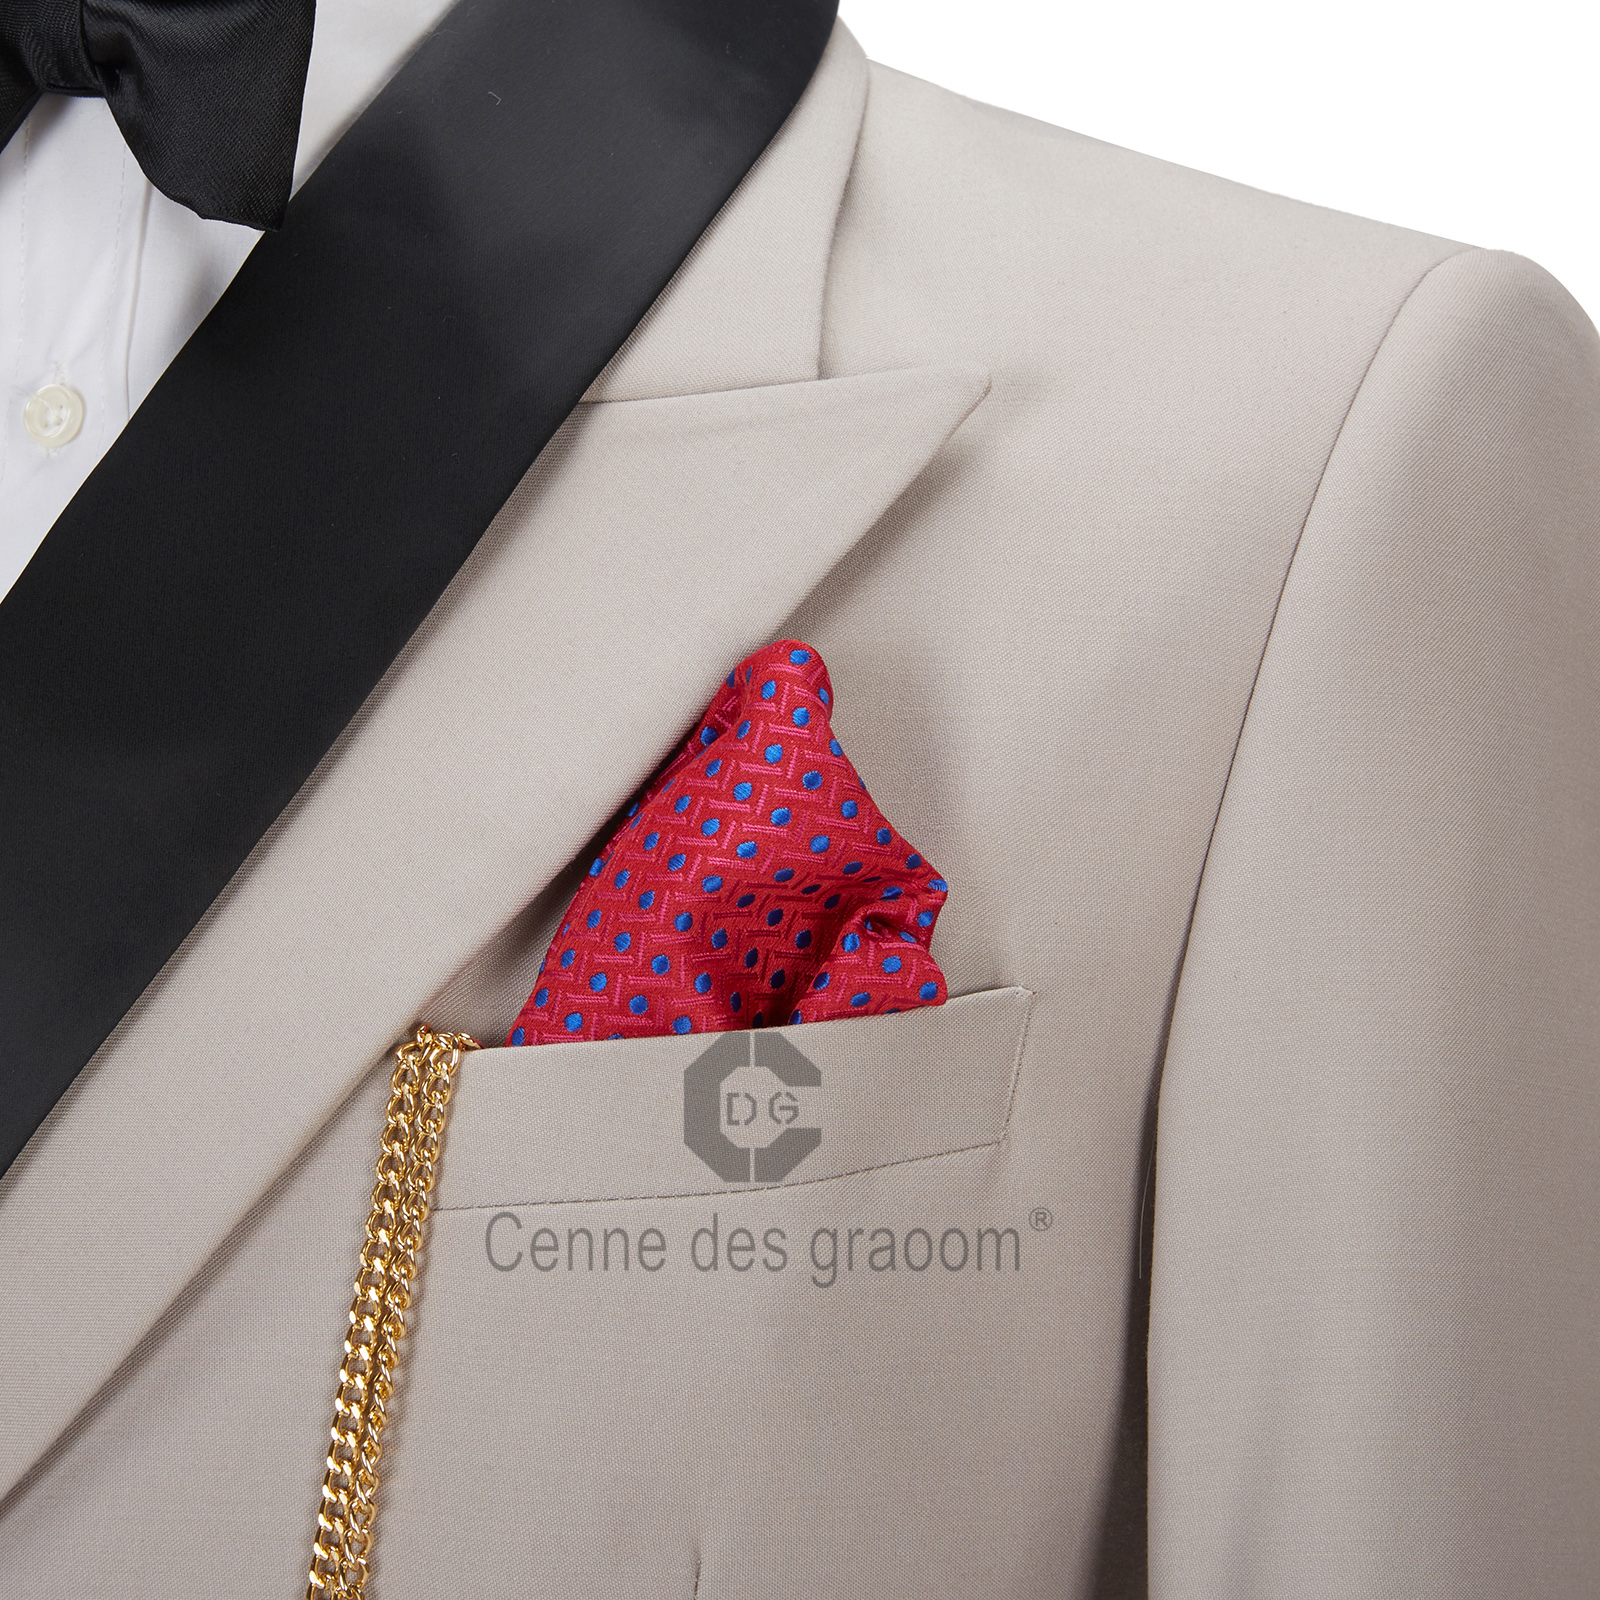 Cenne-Des-Graoom-Latest-Coat-Design-Men-Suits-Tailor-Made-Tuxedo-2-Pieces-Blazer-Wedding-Party-1.jpg